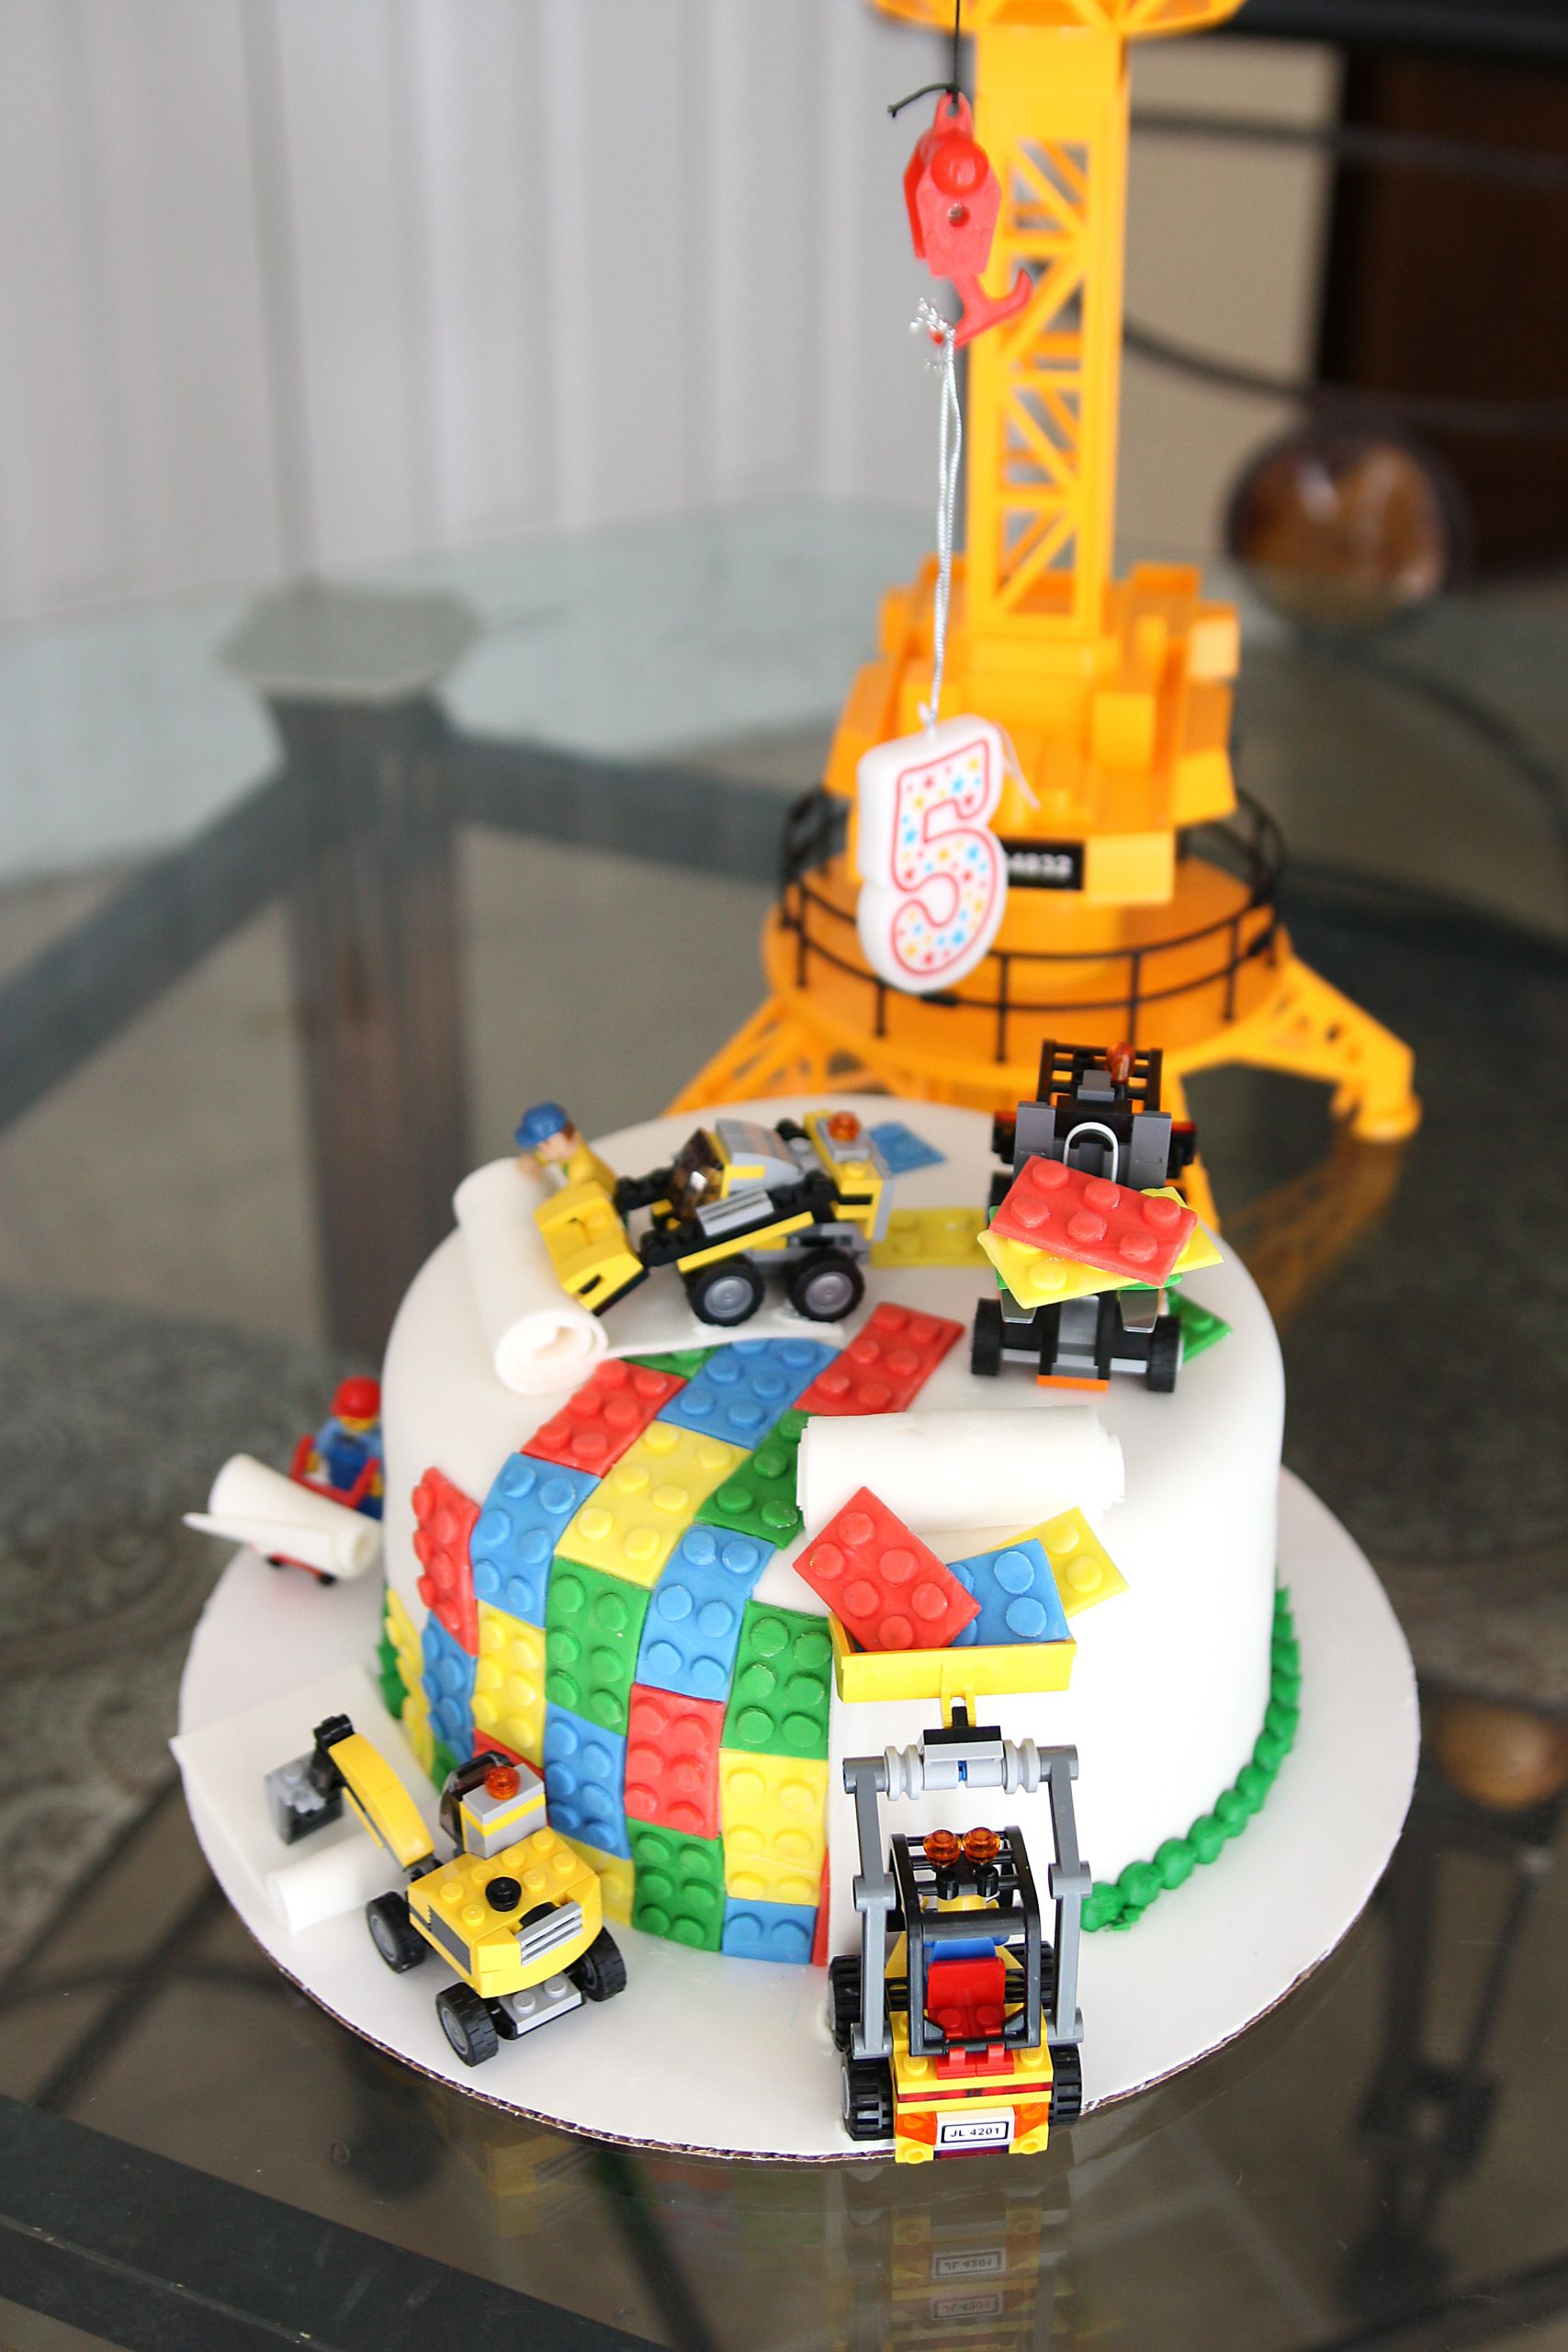 Lego Birthday Cakes
 An Amazing Lego Cake My Little Boy is 5 